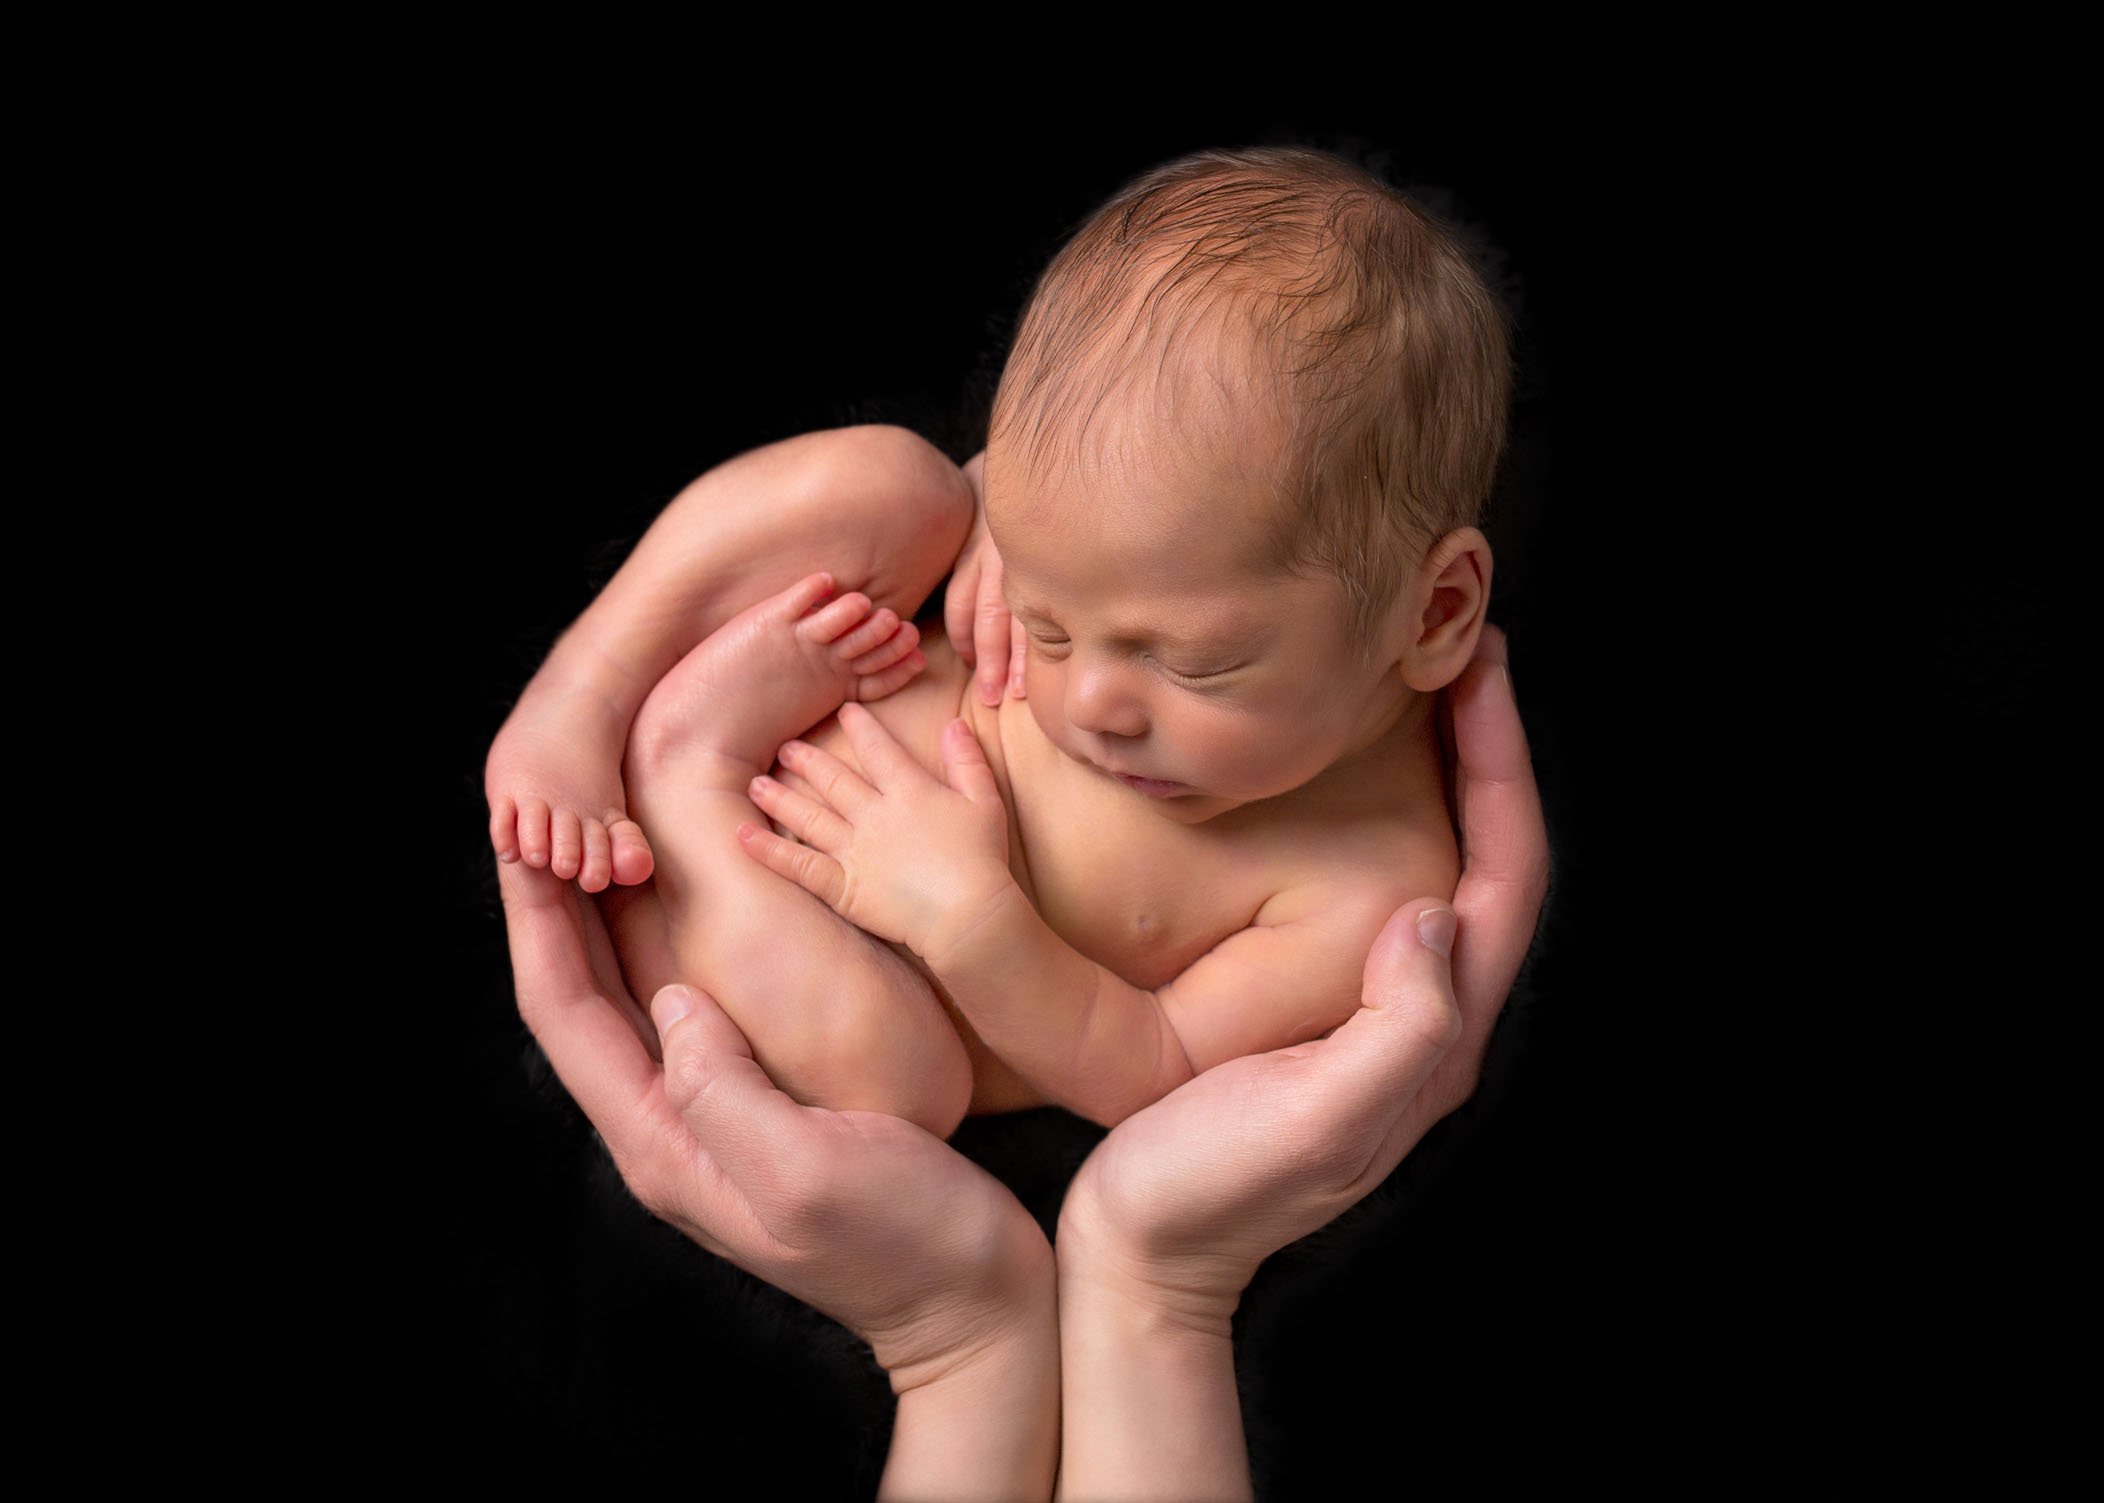 newborn boy cradled in his mom's hands on black background